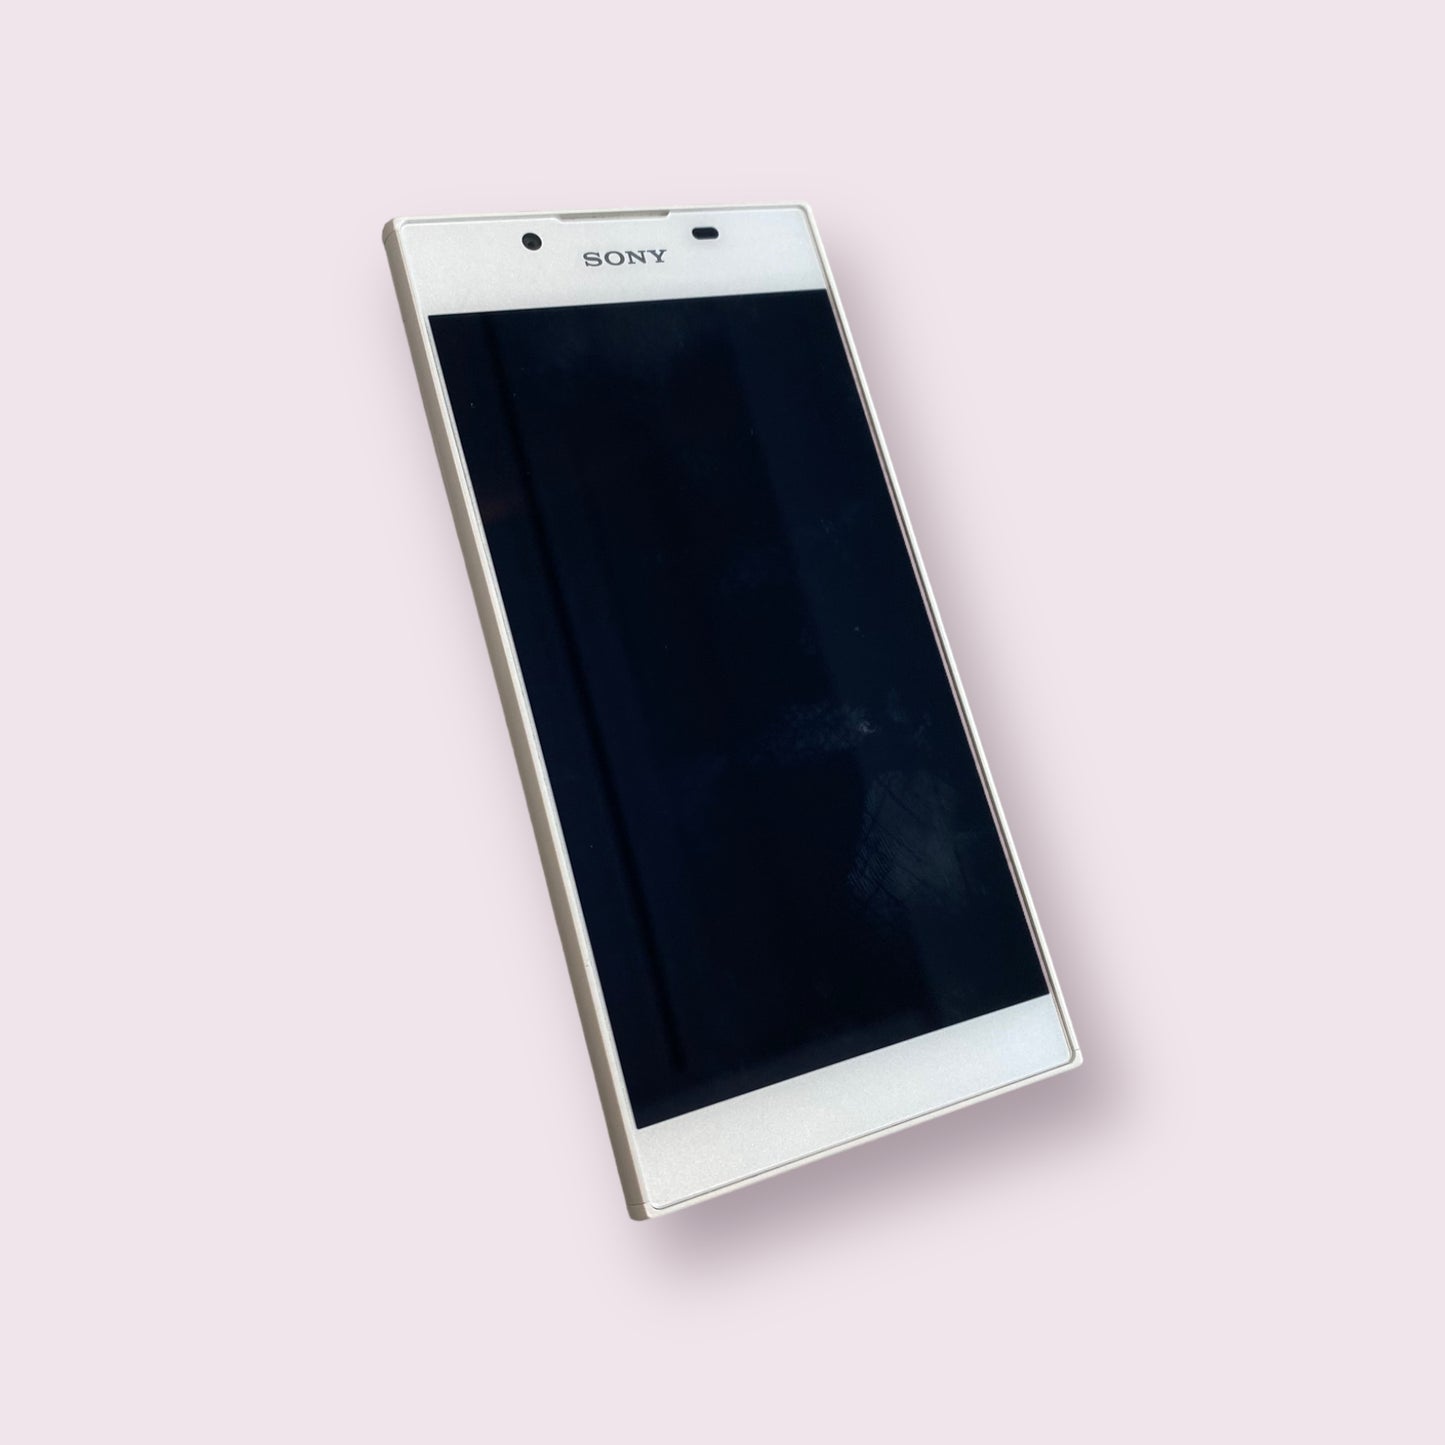 Sony Xperia L1 16GB G3311 Android Smartphone White - Unlocked - Grade B